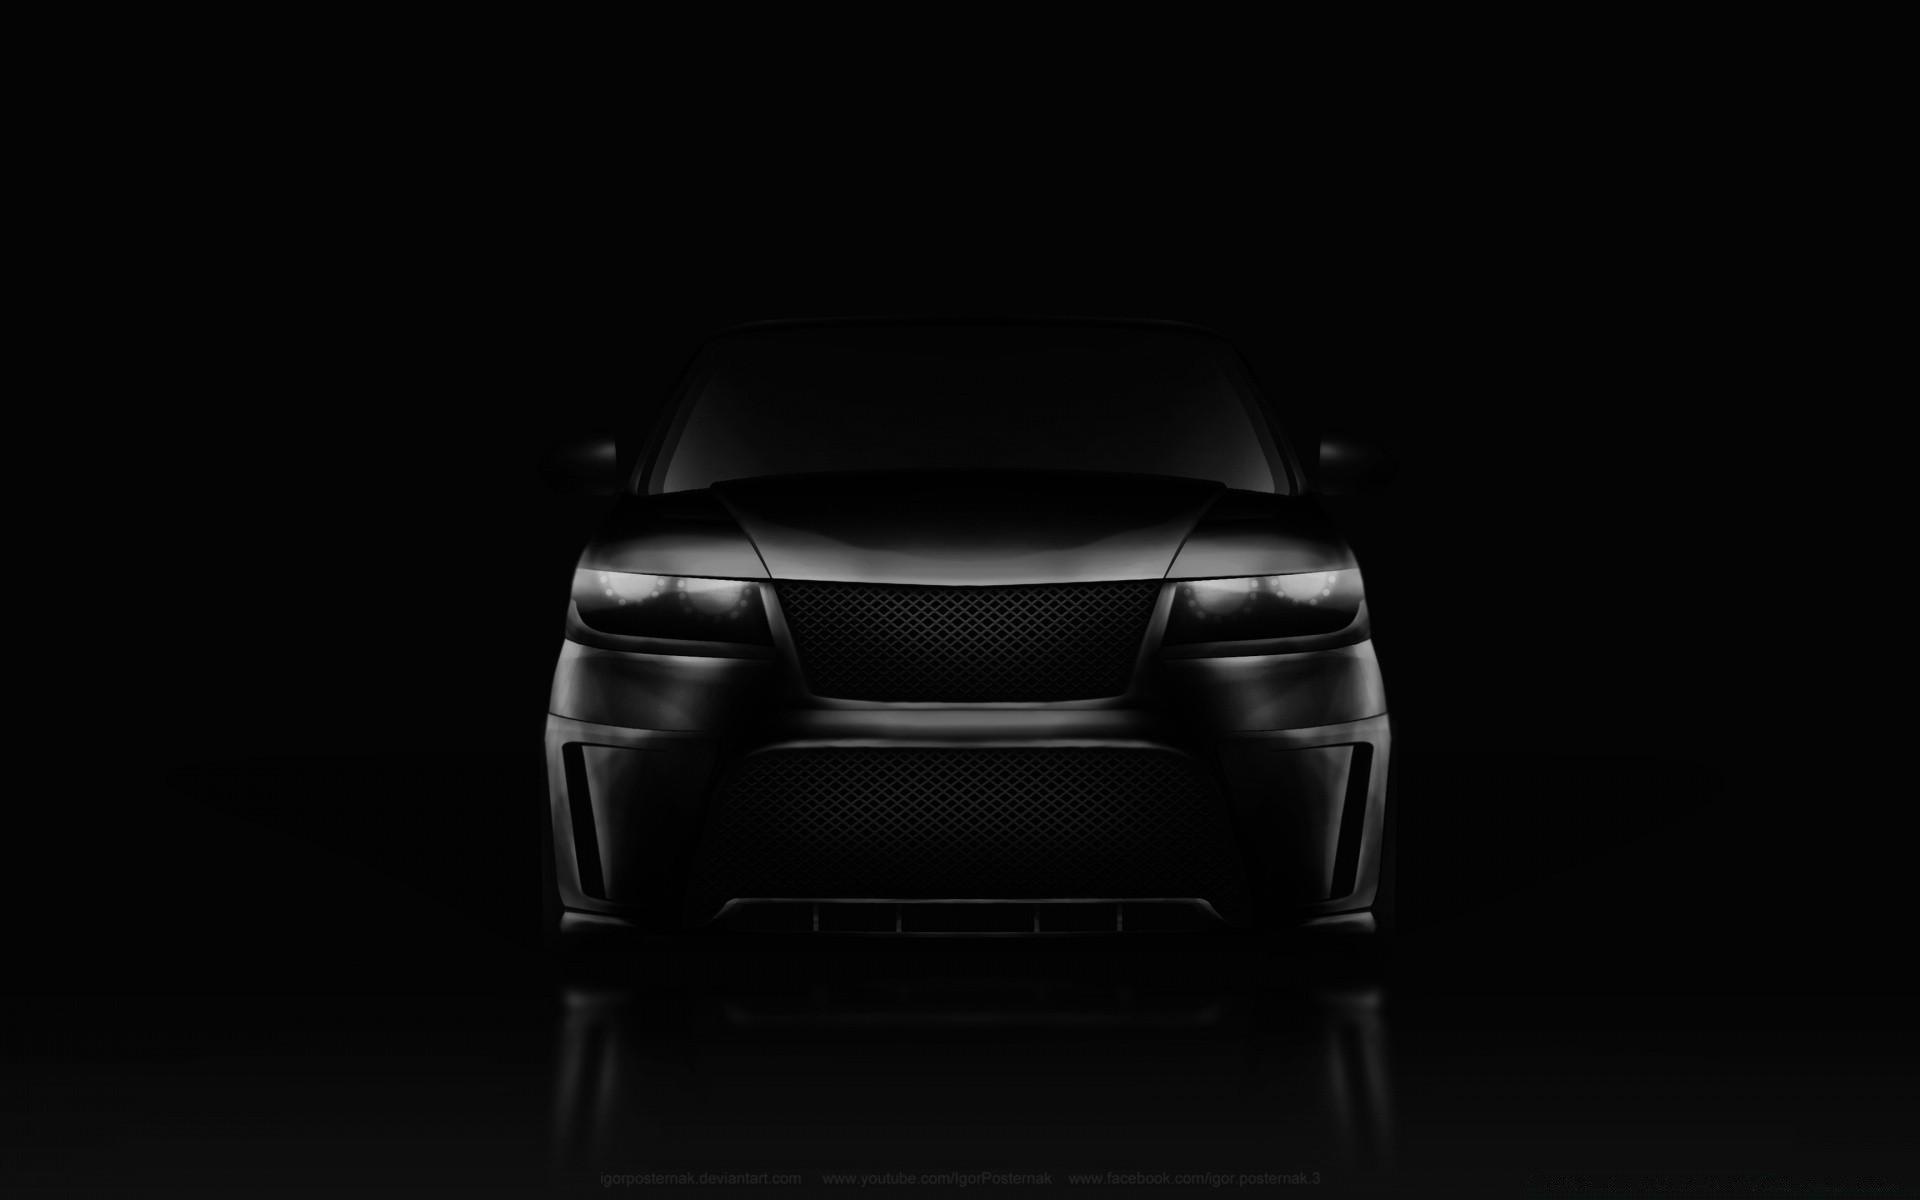 black design dark car studio light desktop modern luxury classic art elegant chrome monochrome fashion